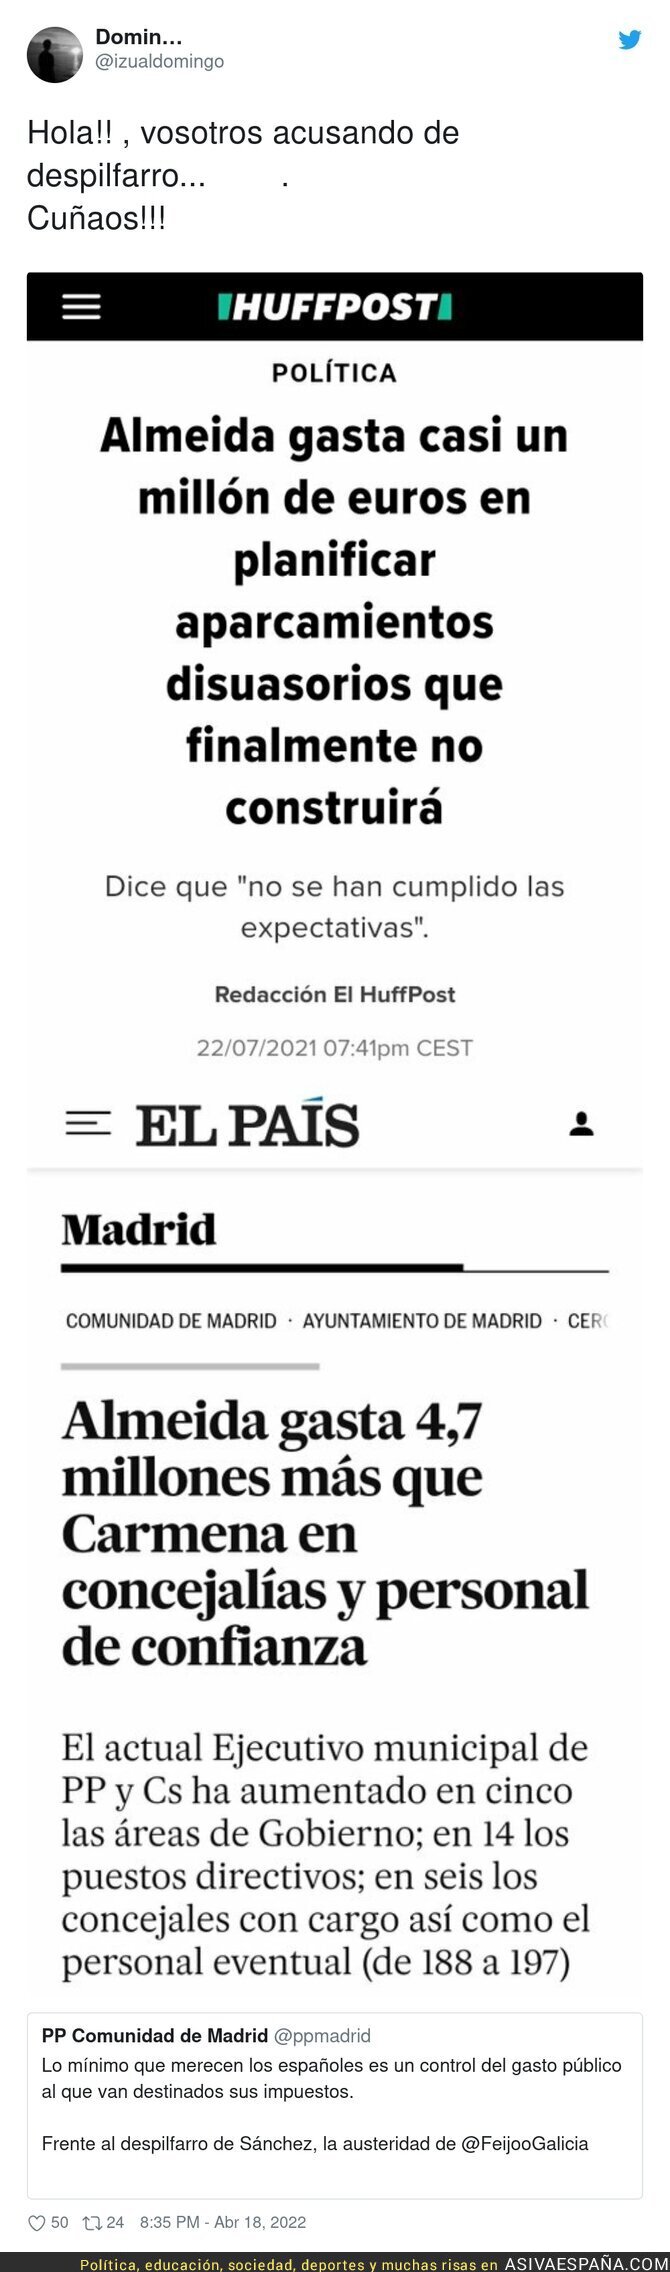 El despilfarro del PP en Madrid